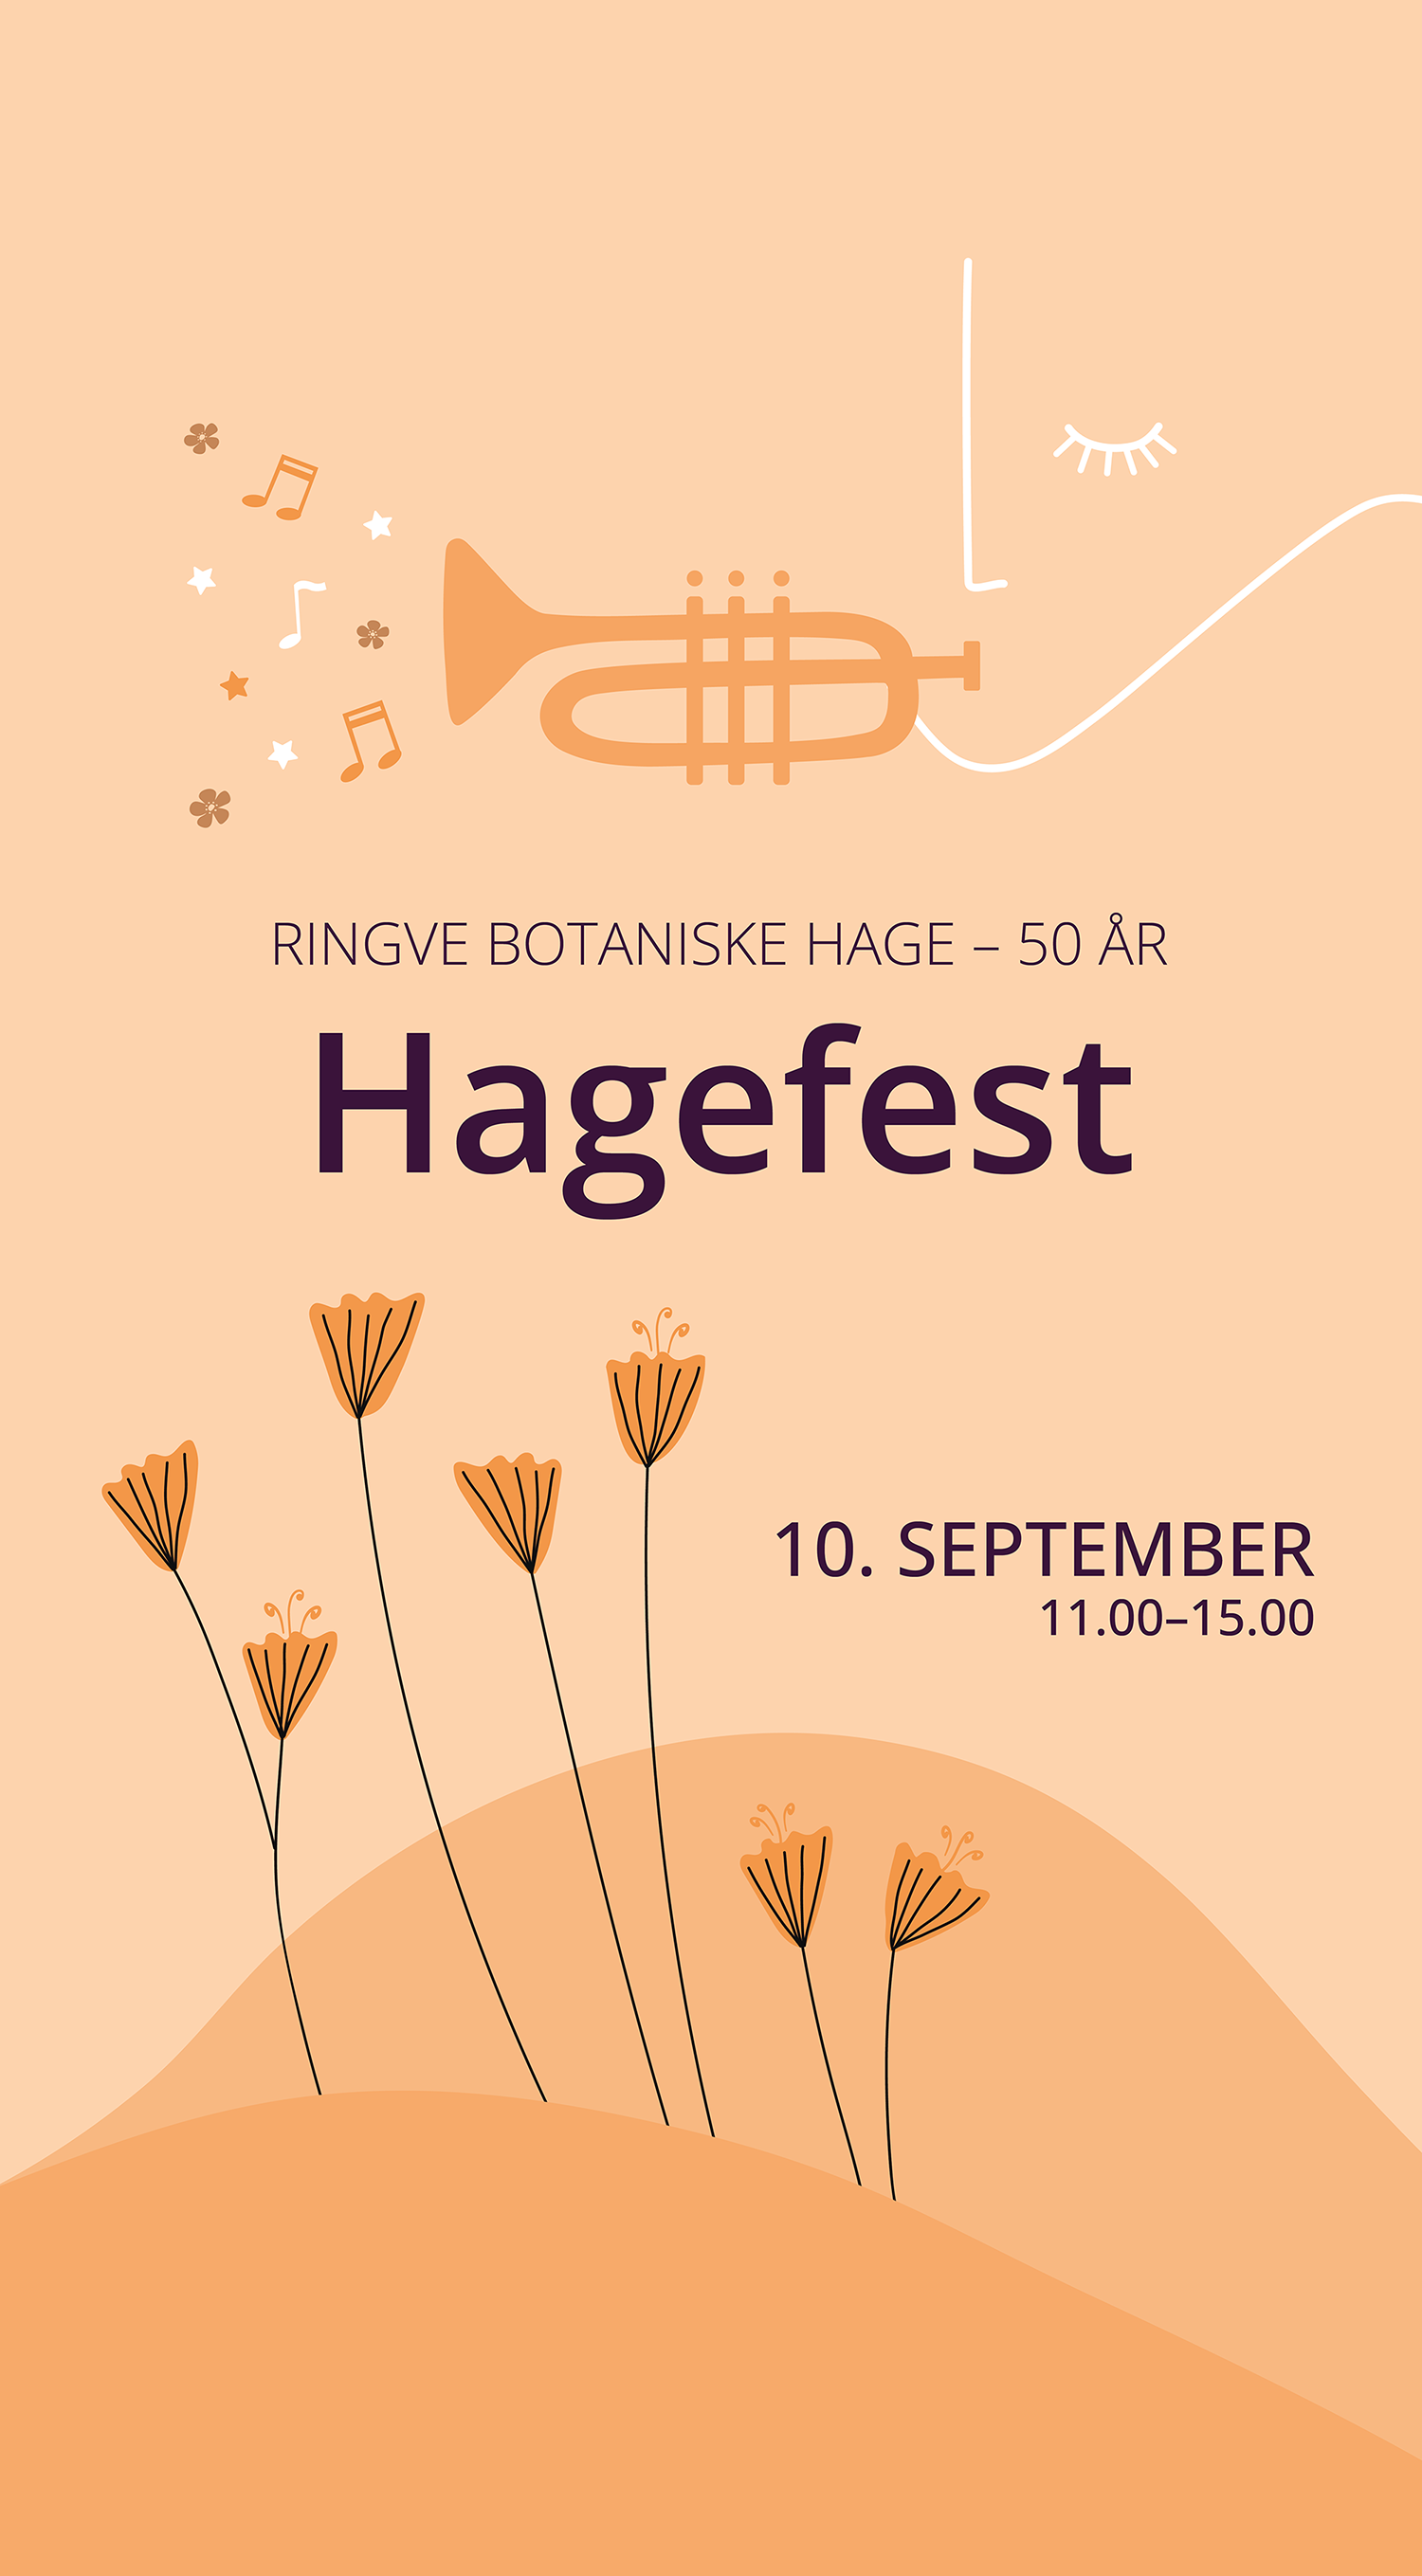 Banner for hagefest